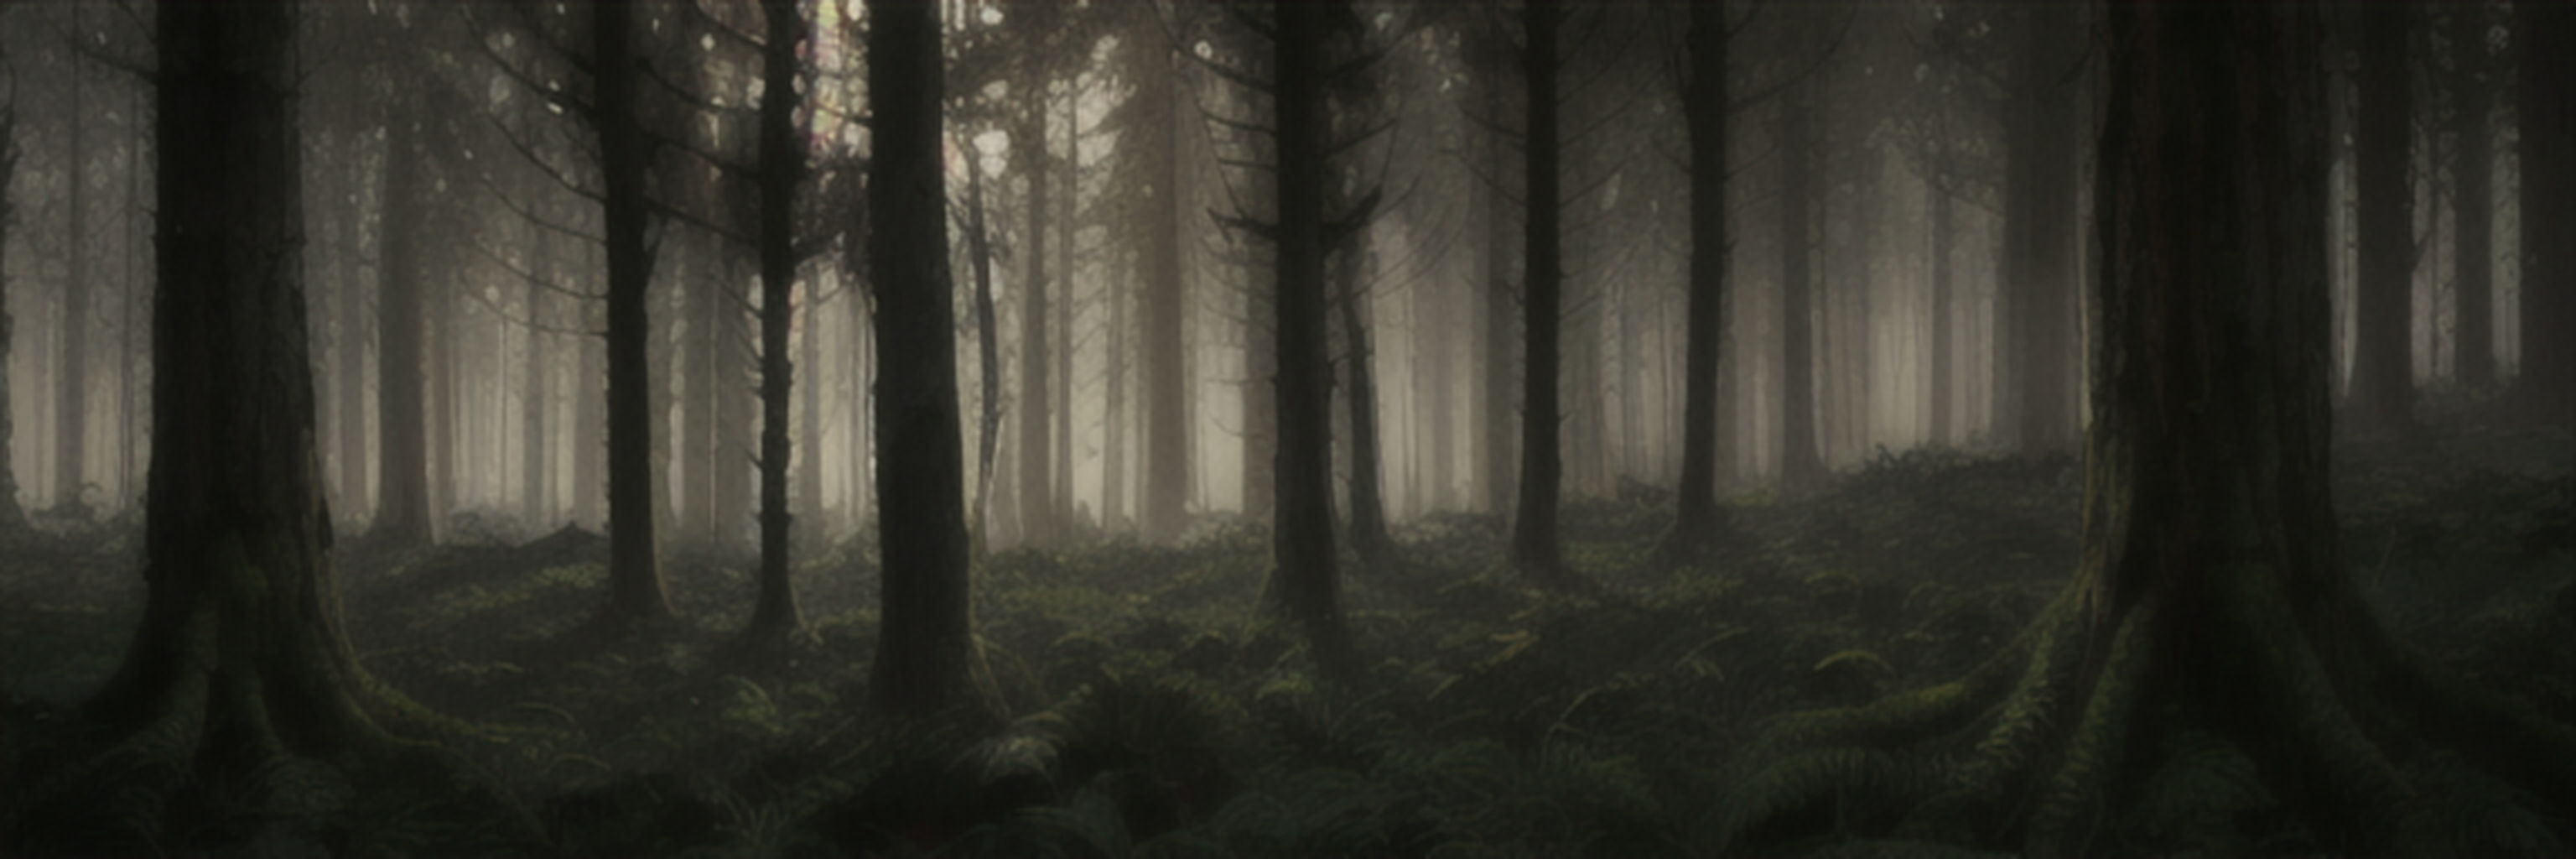 Penedurn Forest at Twilight